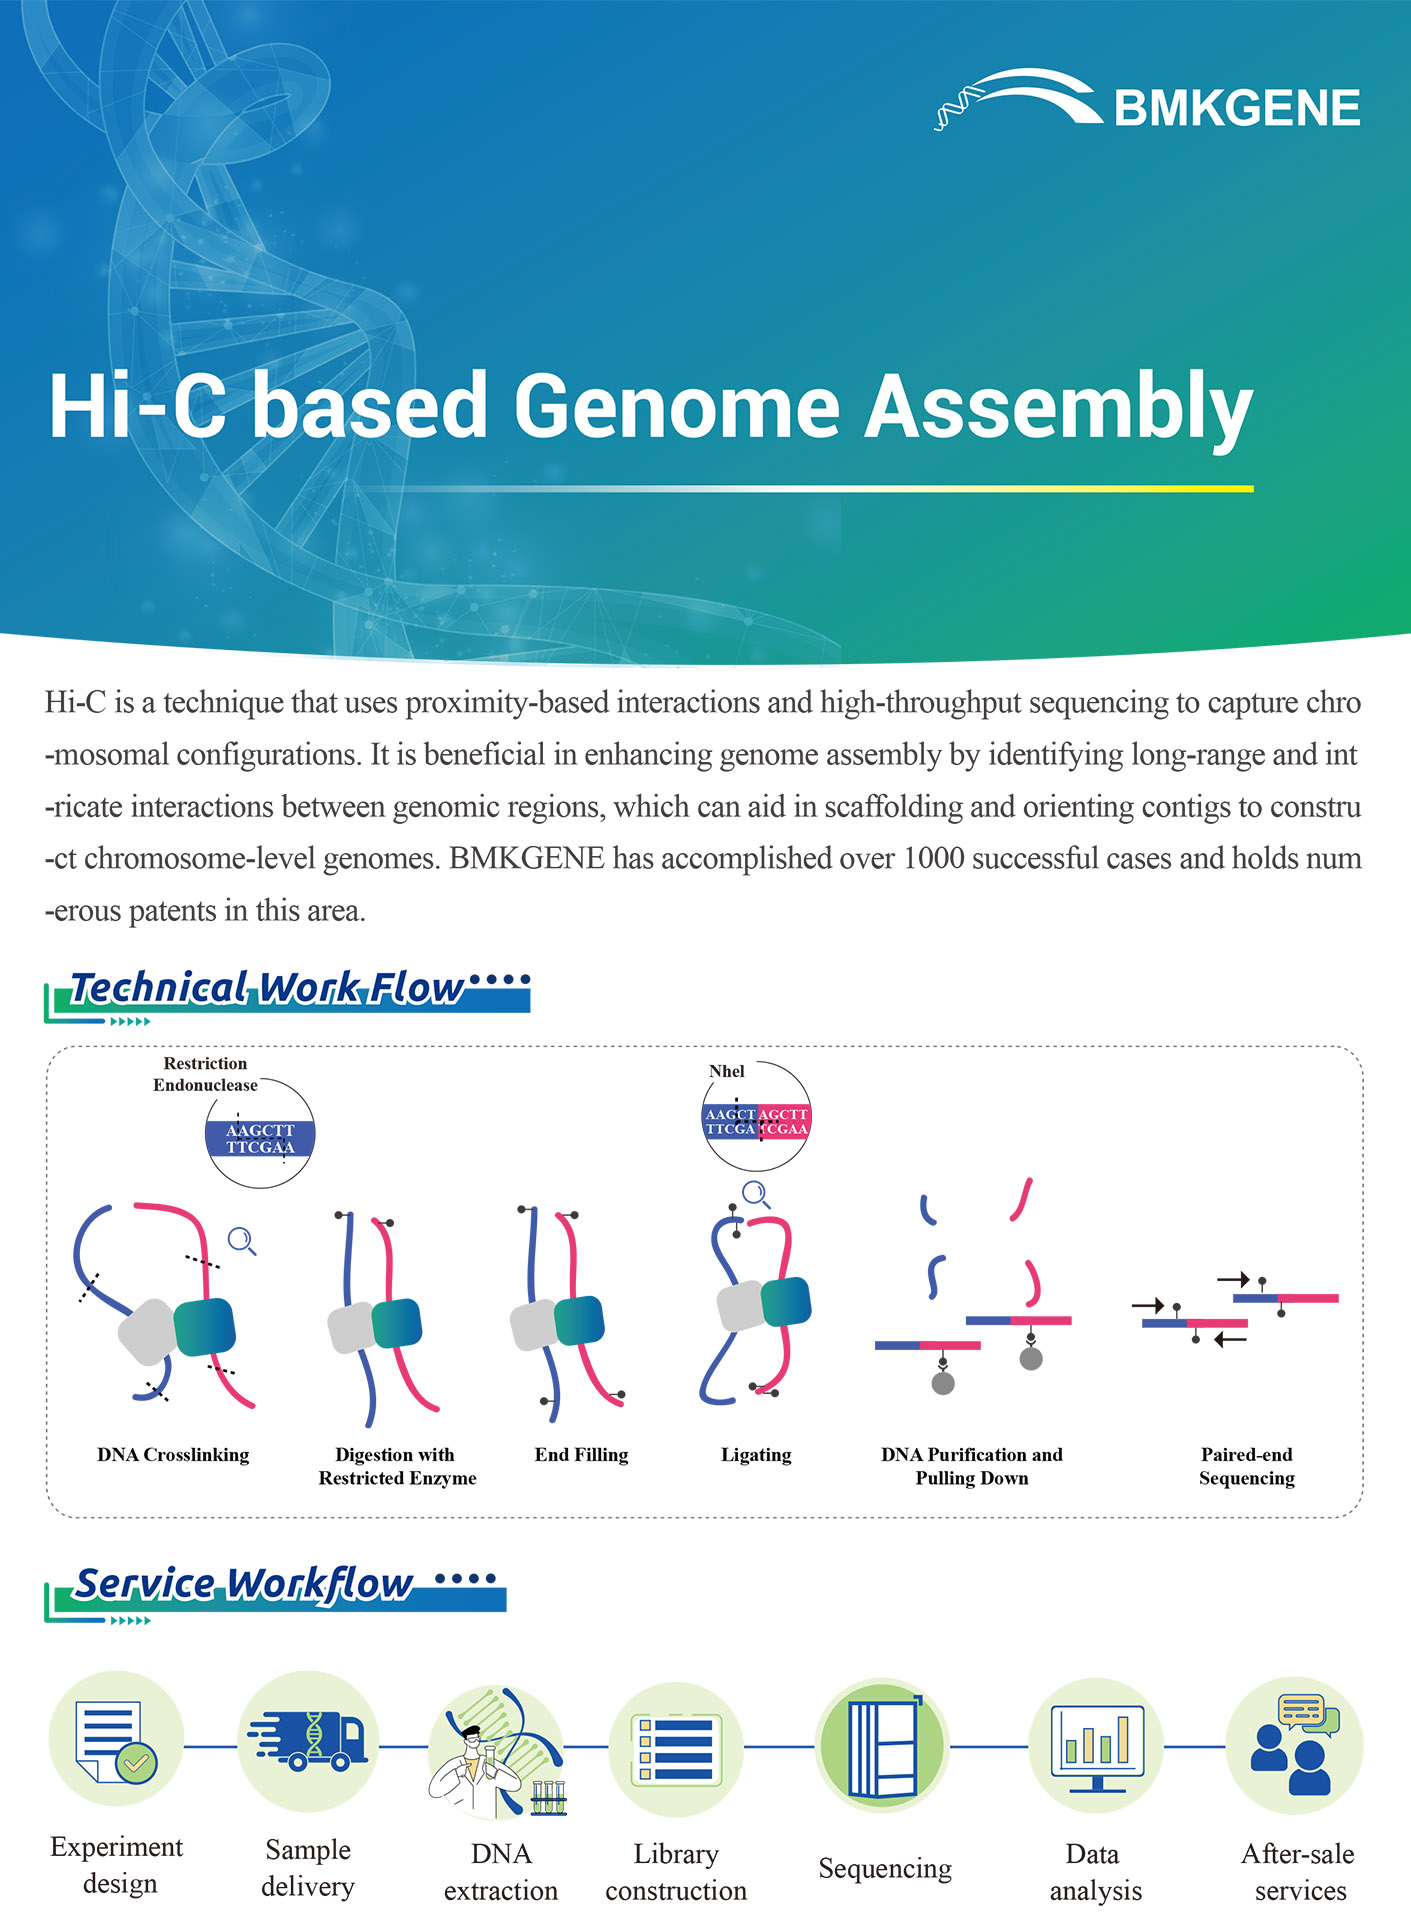 https://www.bmkgene.com/uploads/Hi-C-base-Genome-Assembly-BMKGENE-2310.pdf